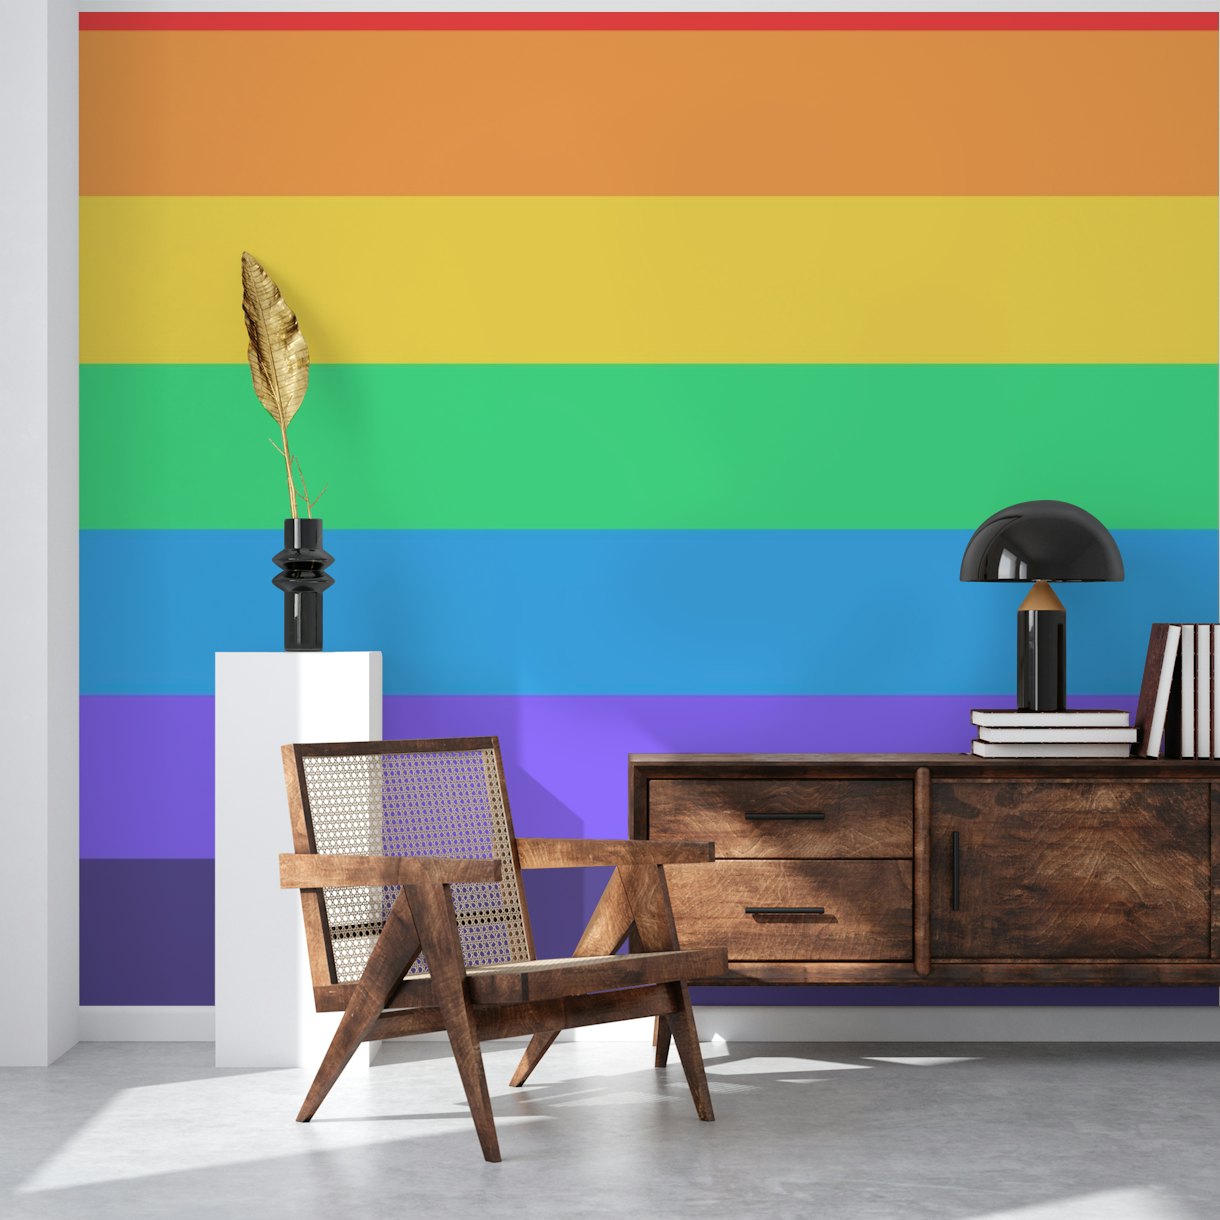 Basically Rainbow wallpaper